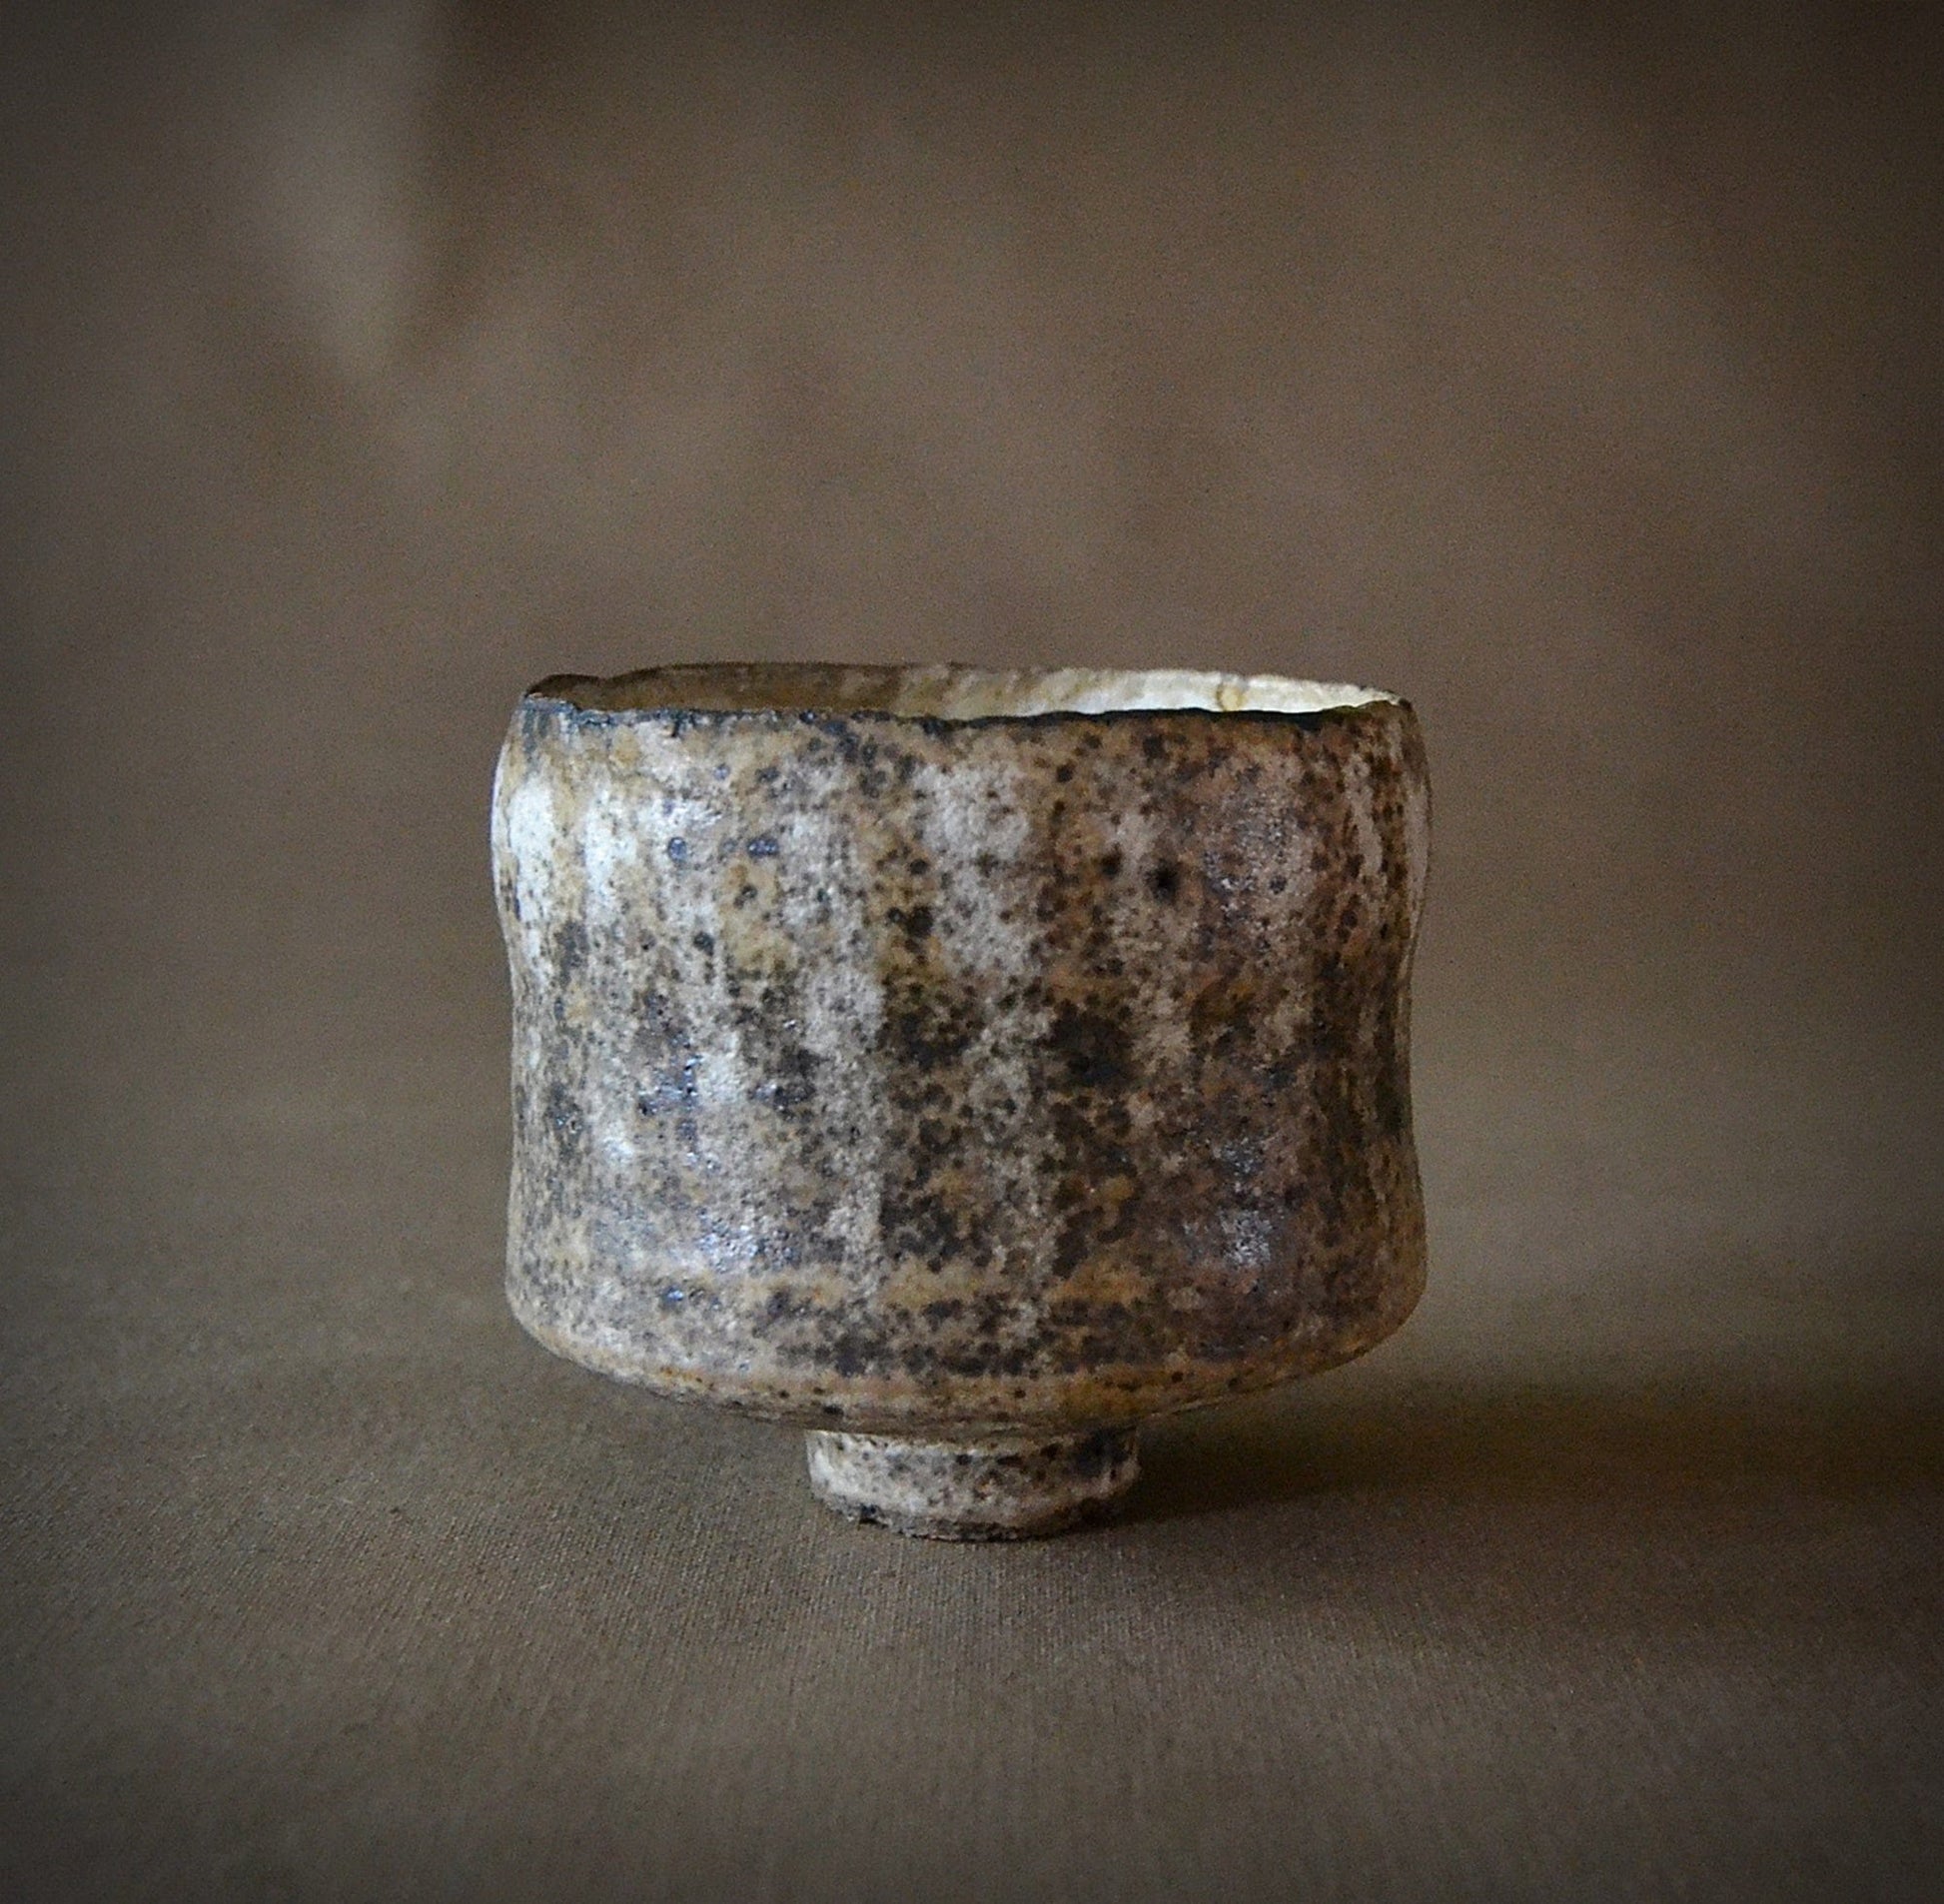 Chawan Ceramic Tea Cup No. 8 by Propeler Studio Coffee cup